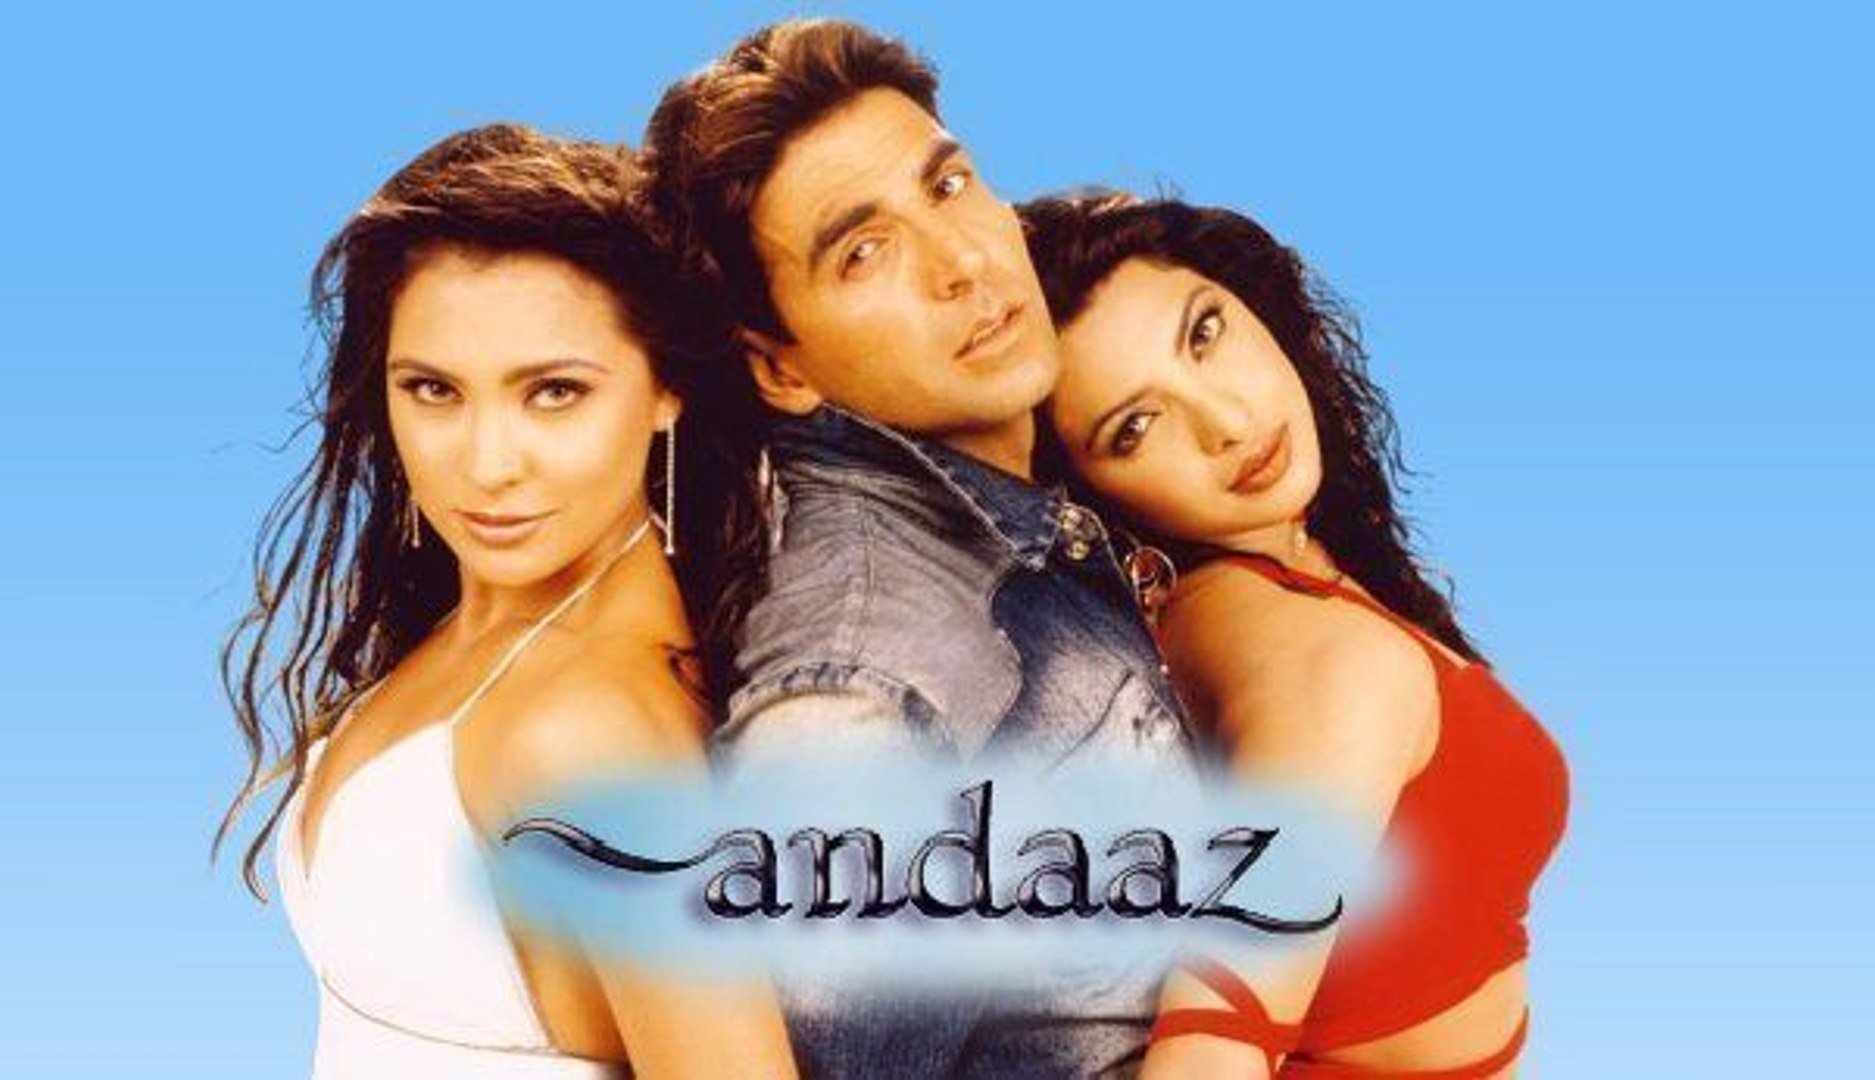 Andaaz - Full Hindi Movie - Akshay Kumar, Priyanka Chopra, Lara Dutta - HD  - cloudypk.com - MoviePlus488 - video Dailymotion